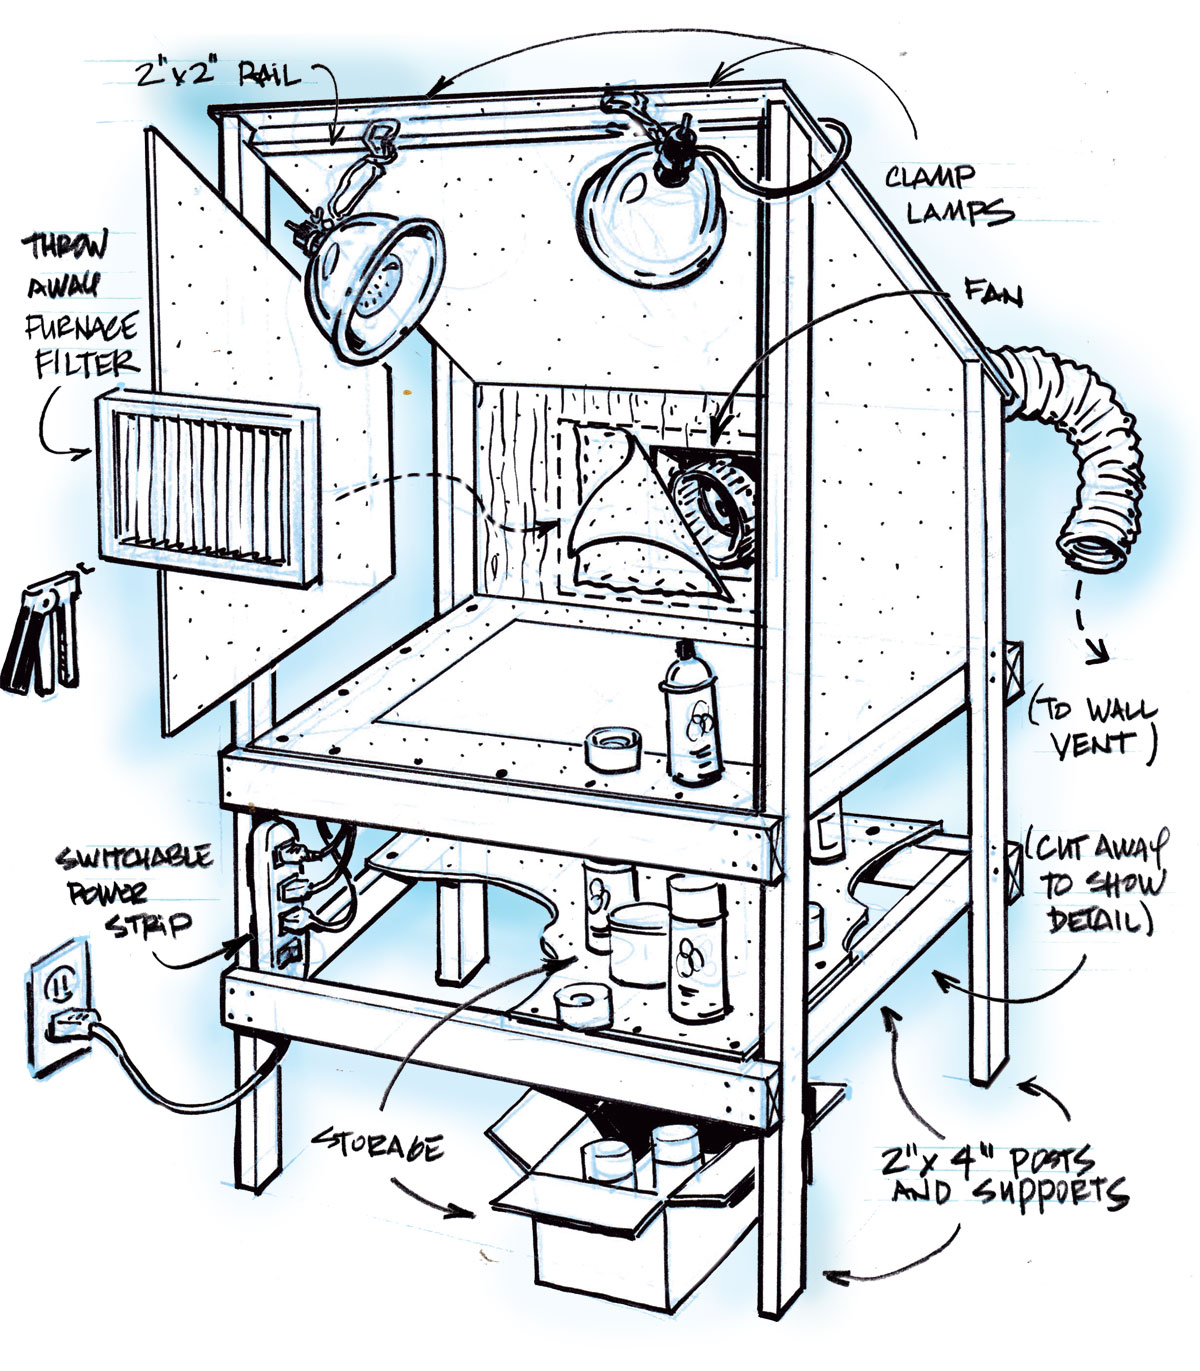 Toy Inventor’s Notebook: Stairwell Spray Booth